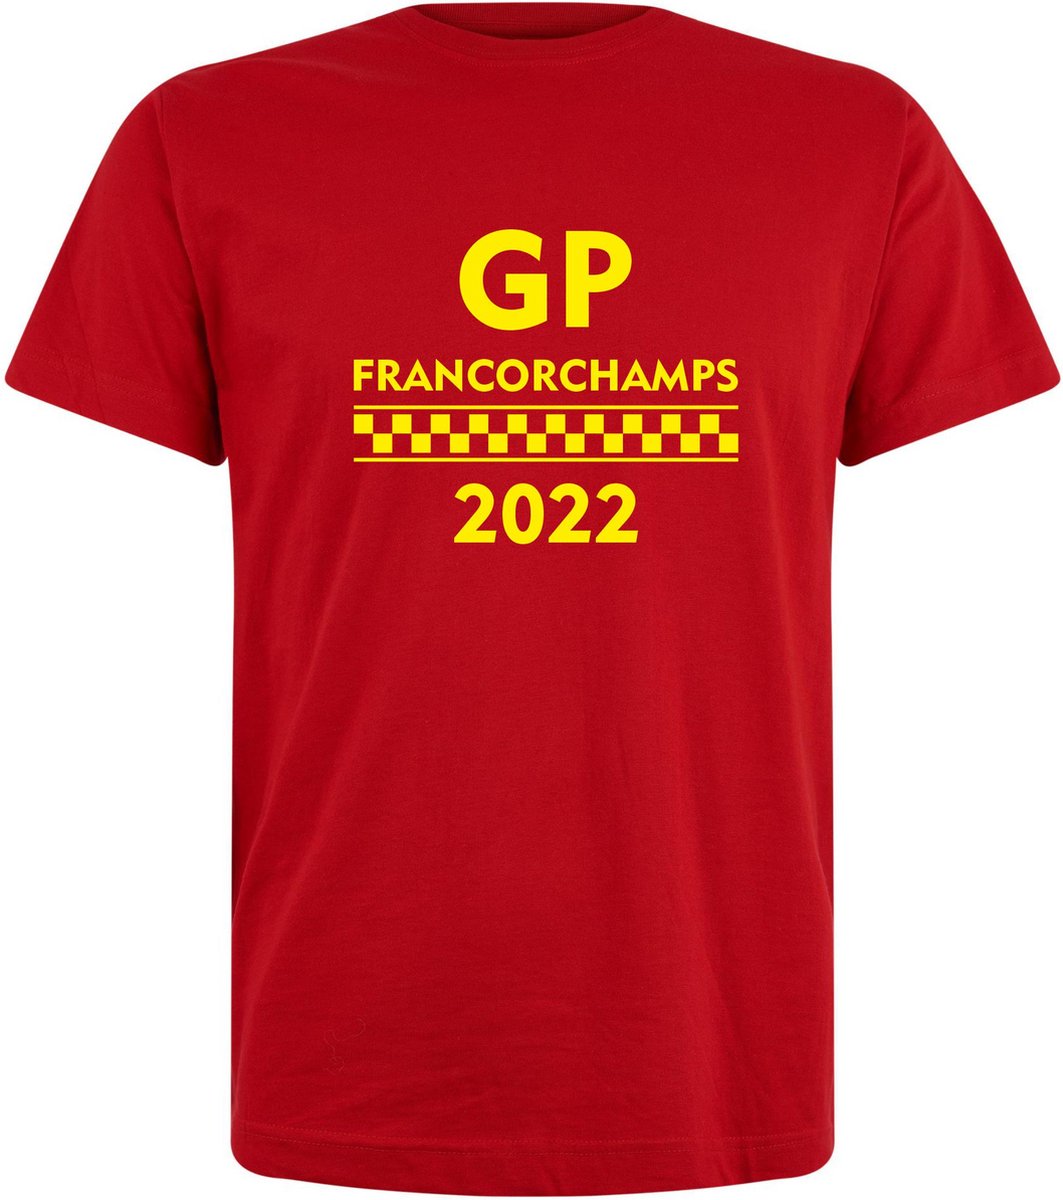 T-shirt GP Francorchamps 2022 | Max Verstappen / Red Bull Racing / Formule 1 fan | Grand Prix Circuit Spa-Francorchamps | kleding shirt | Rood | maat 3XL